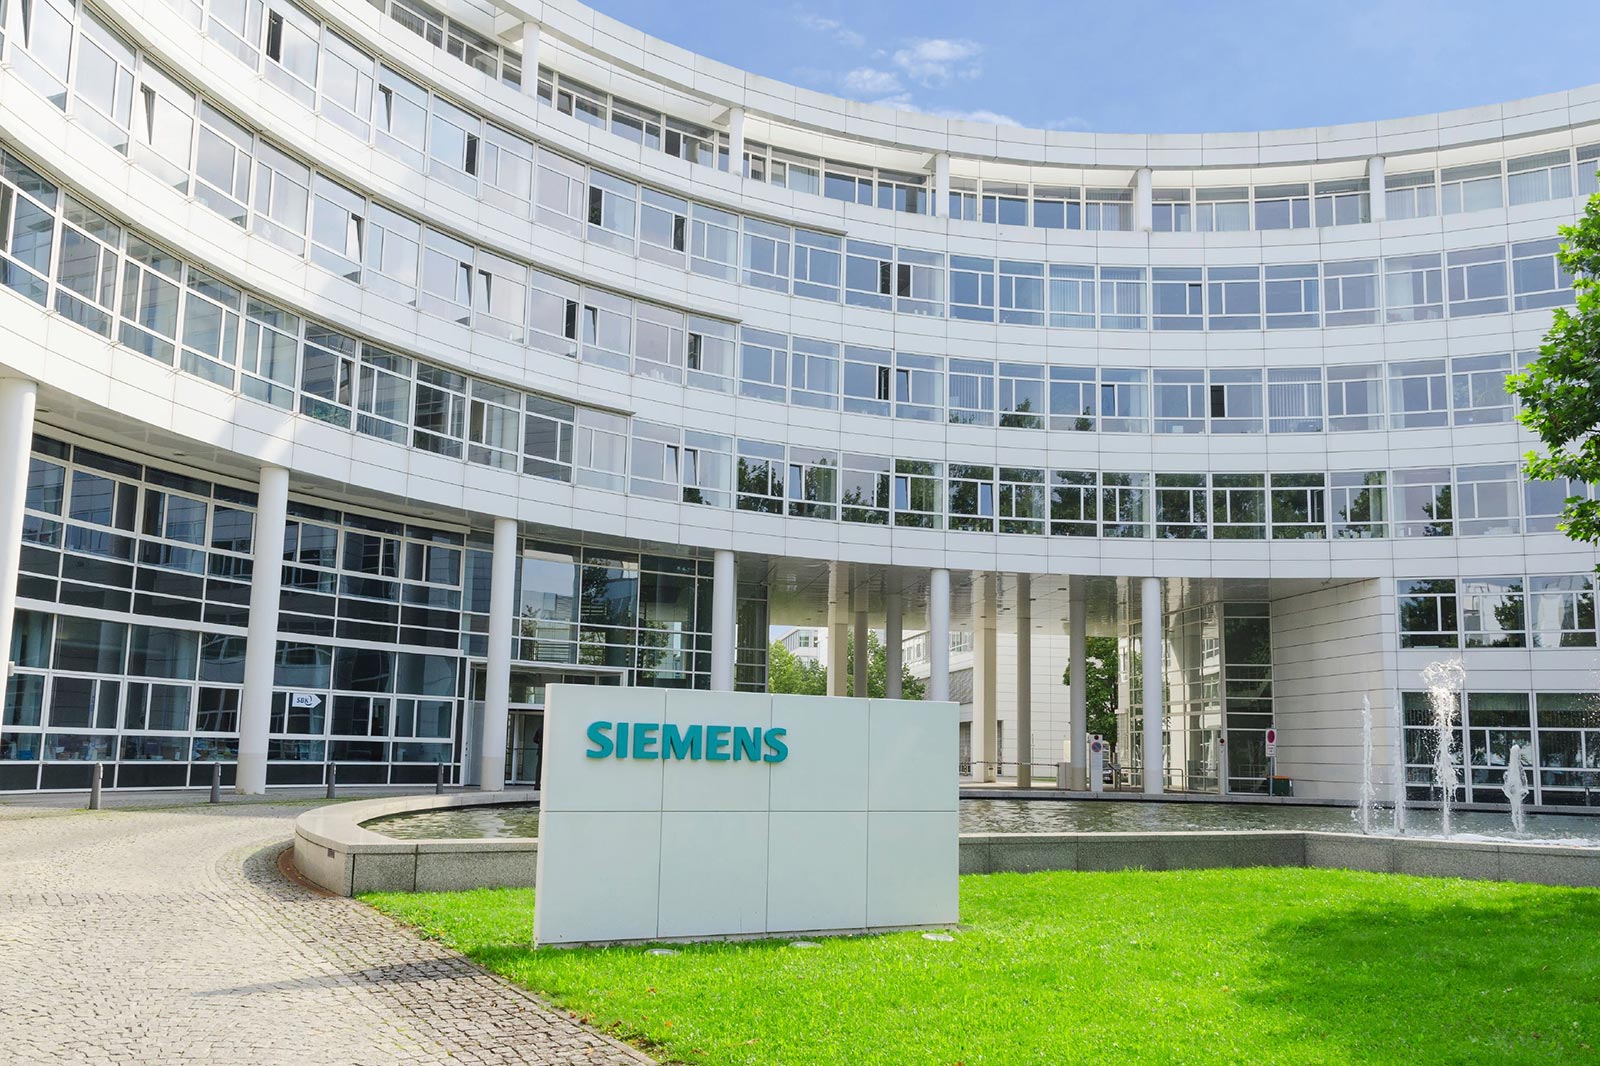 Siemens Headquarters